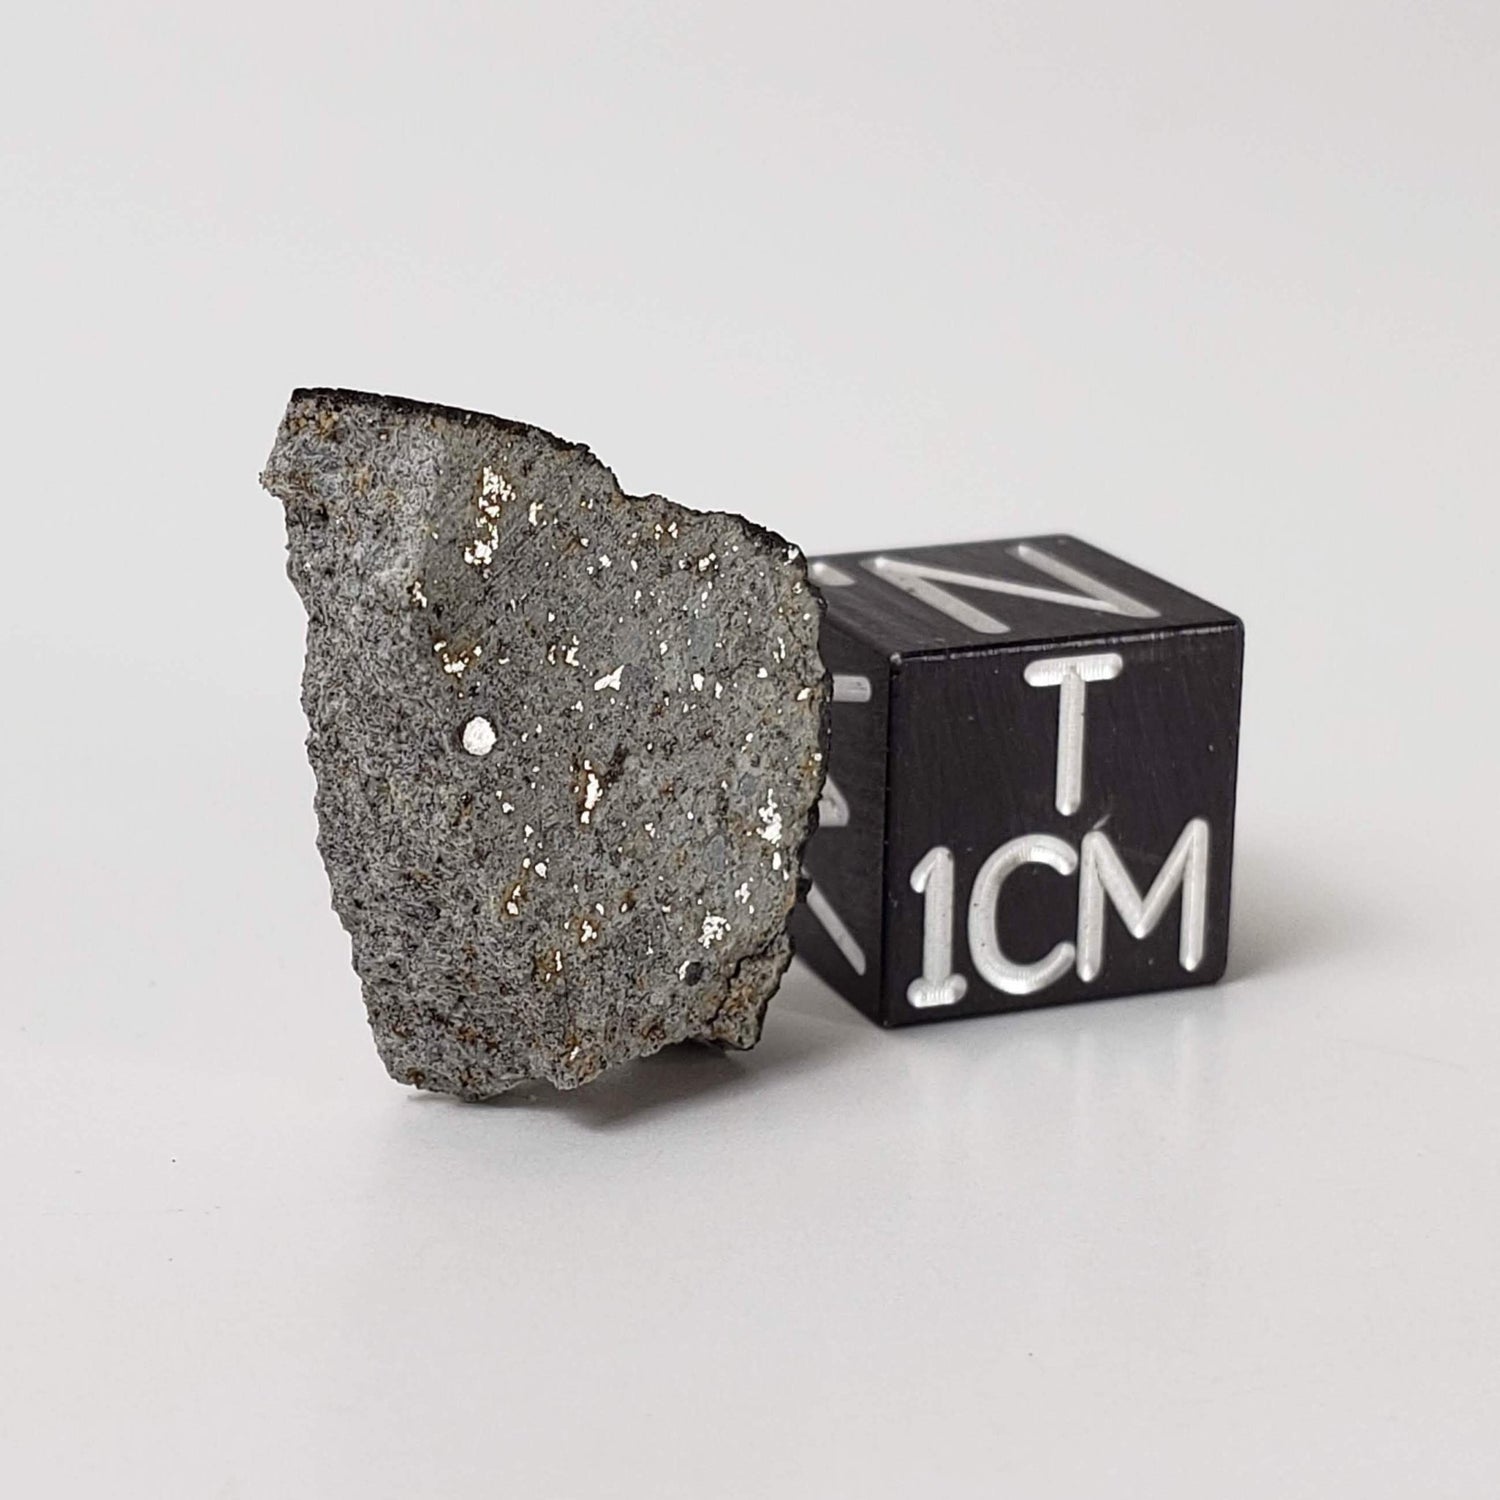 Bruderheim Meteorite | 2.80gr | Part Slice | L6 Class | Observed Fall 1960 Canada